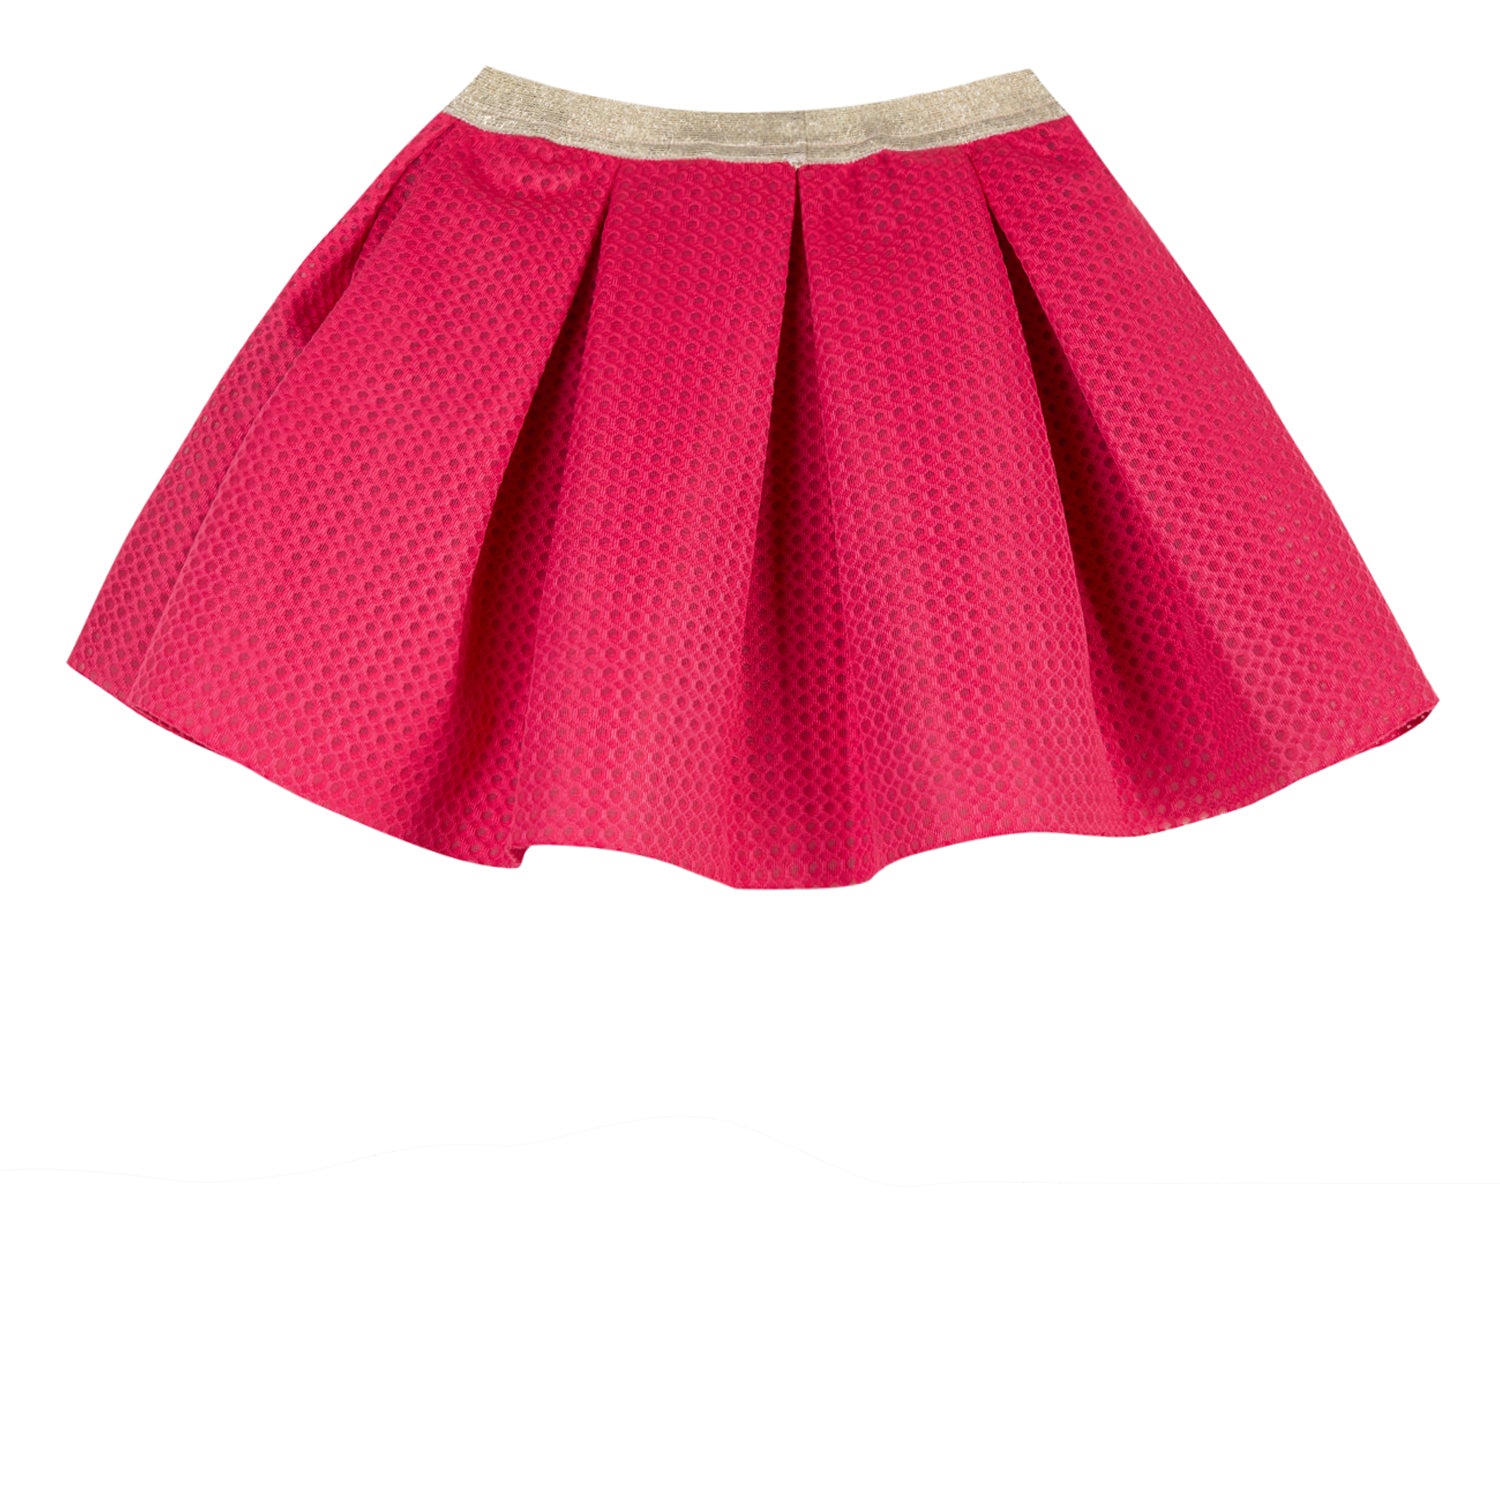 Women Short Skirt Irregular Double-layer Mesh Skirt Bubble Skirt Ball Gown  at Rs 1499.00  Ladies Fashion Garments, Fashion Apparel, Women Fashion  Clothing, Ladies Garments, Women Clothing - My Online Collection Store